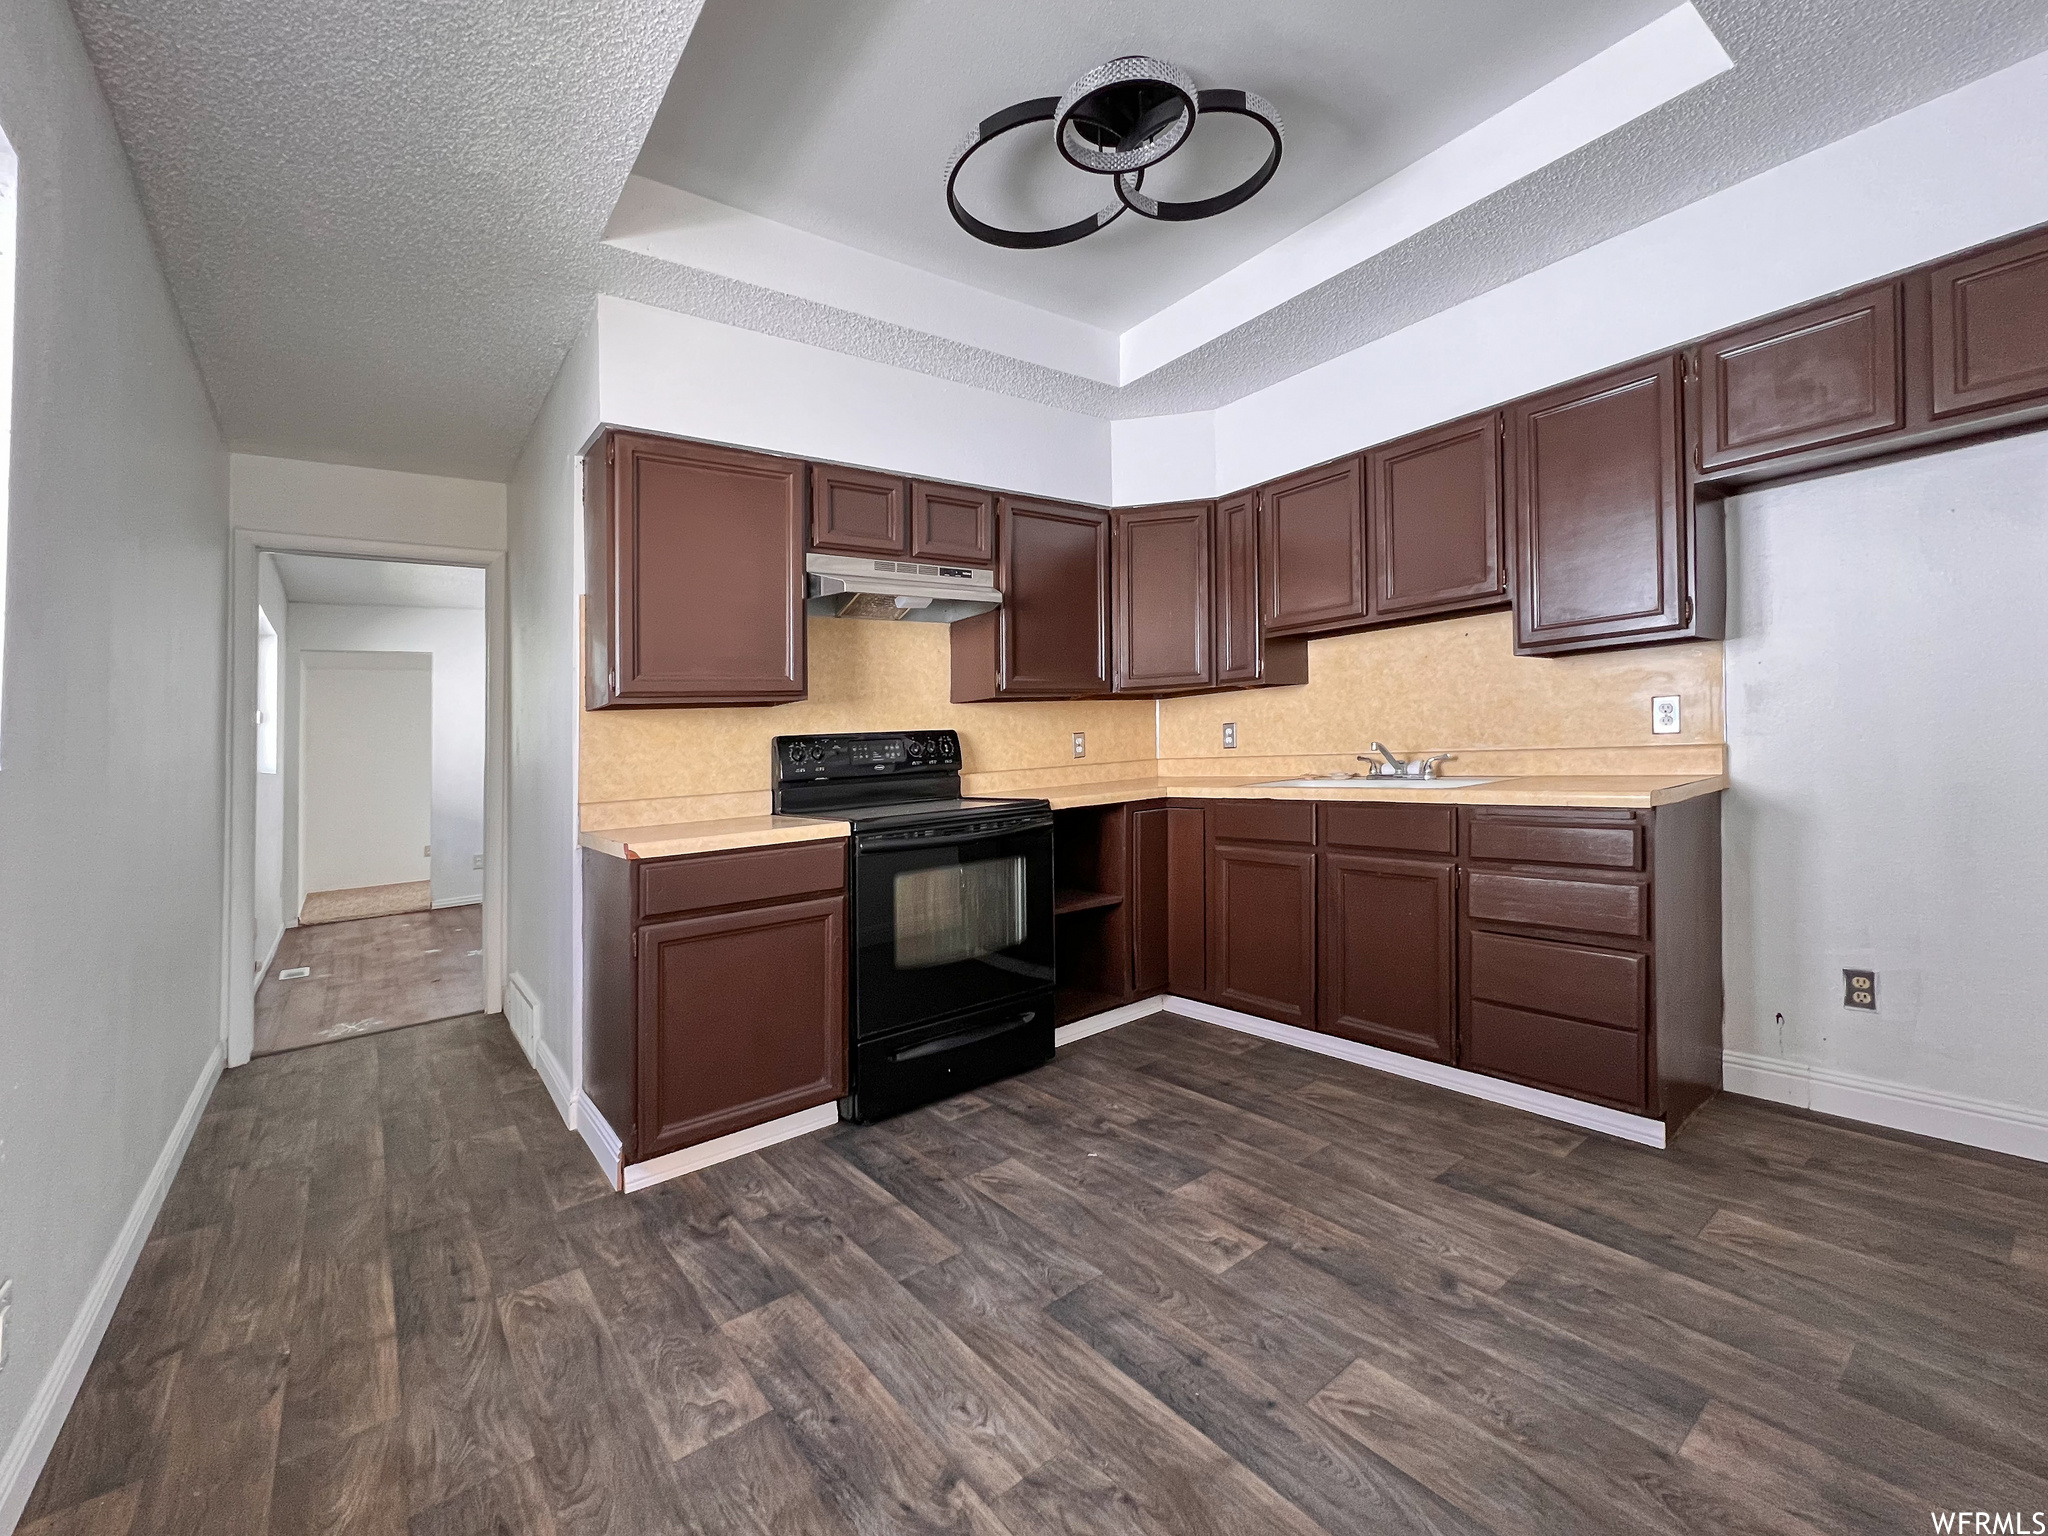 Kitchen featuring range oven, extractor fan, light countertops, dark brown cabinetry, and dark floors